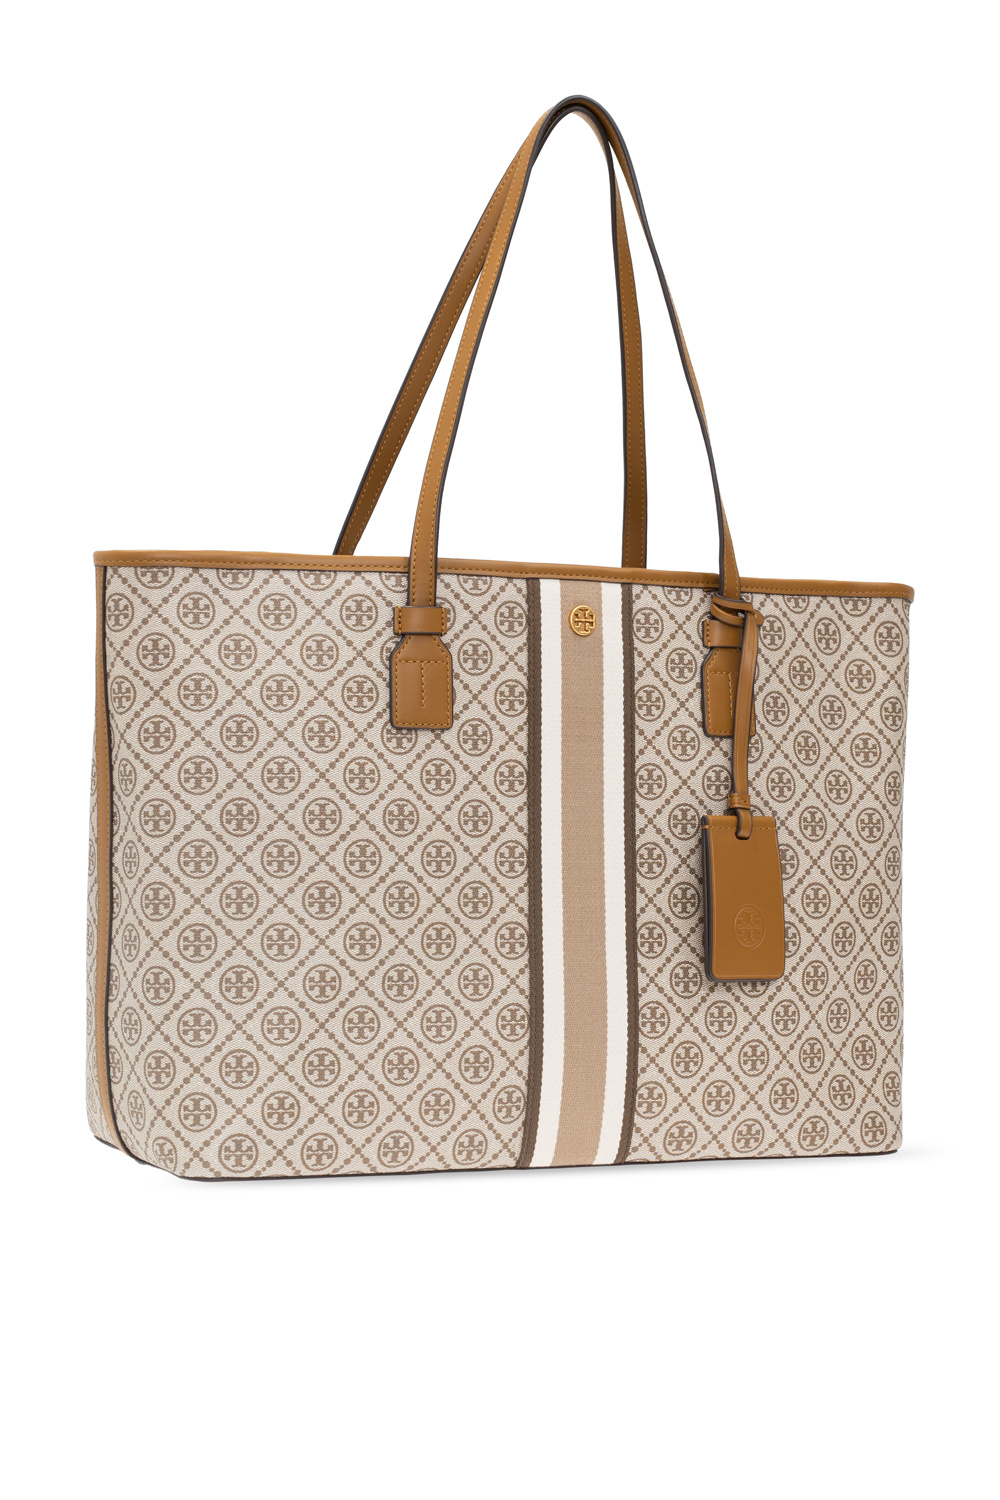 TORY BURCH ˉ Women's bag, vintage Boston, European and American handbag,  crossbody shoulder bag, sweet